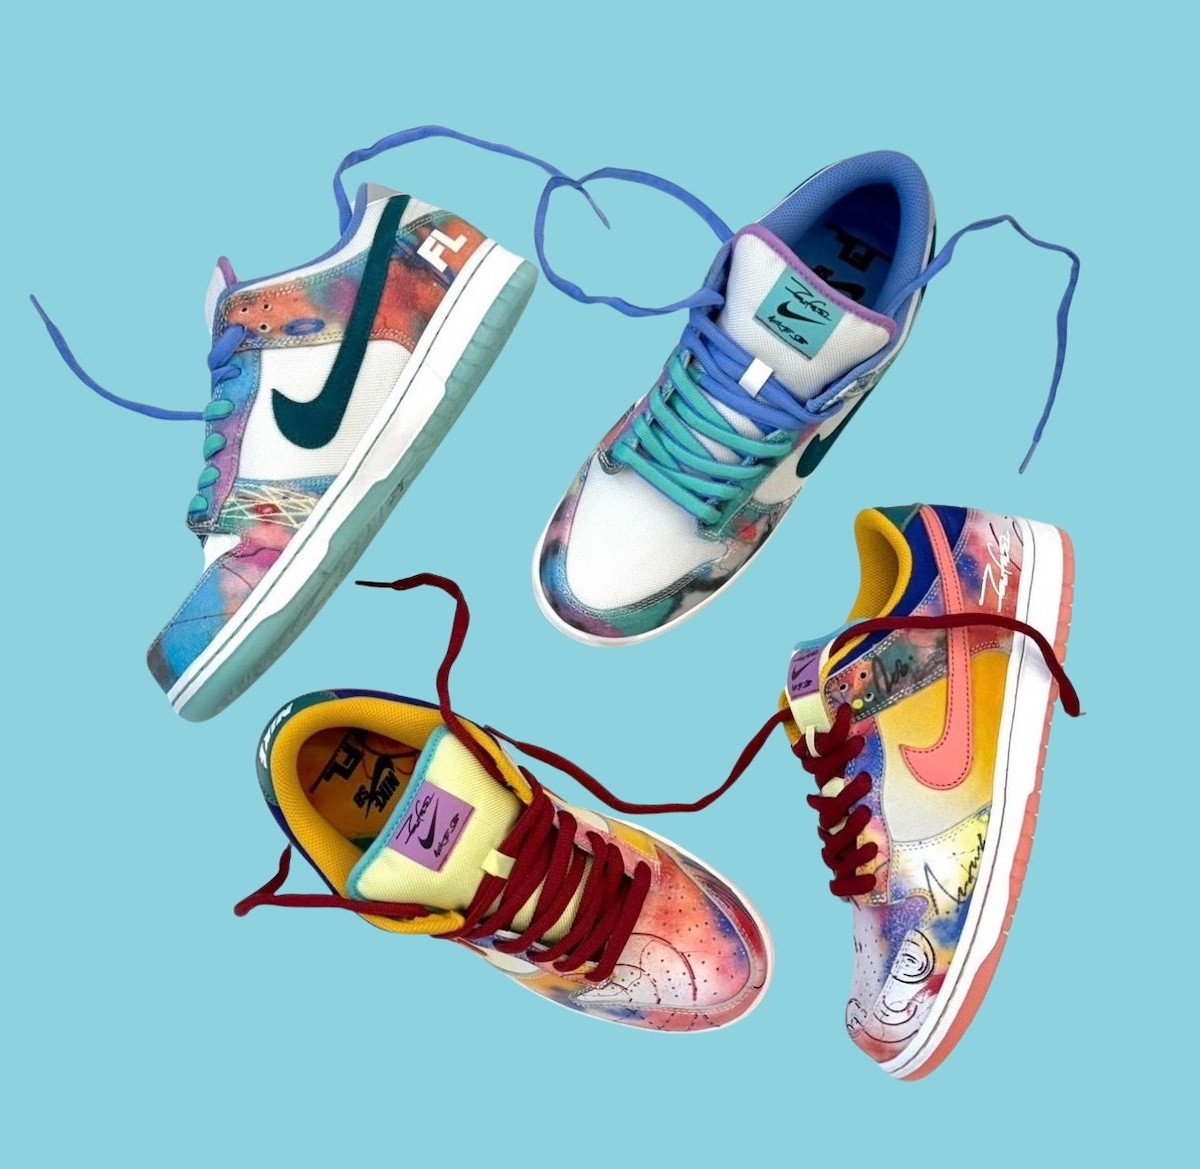 La nouvelle collaboration Futura x Nike SB Dunk Low sortira en mai